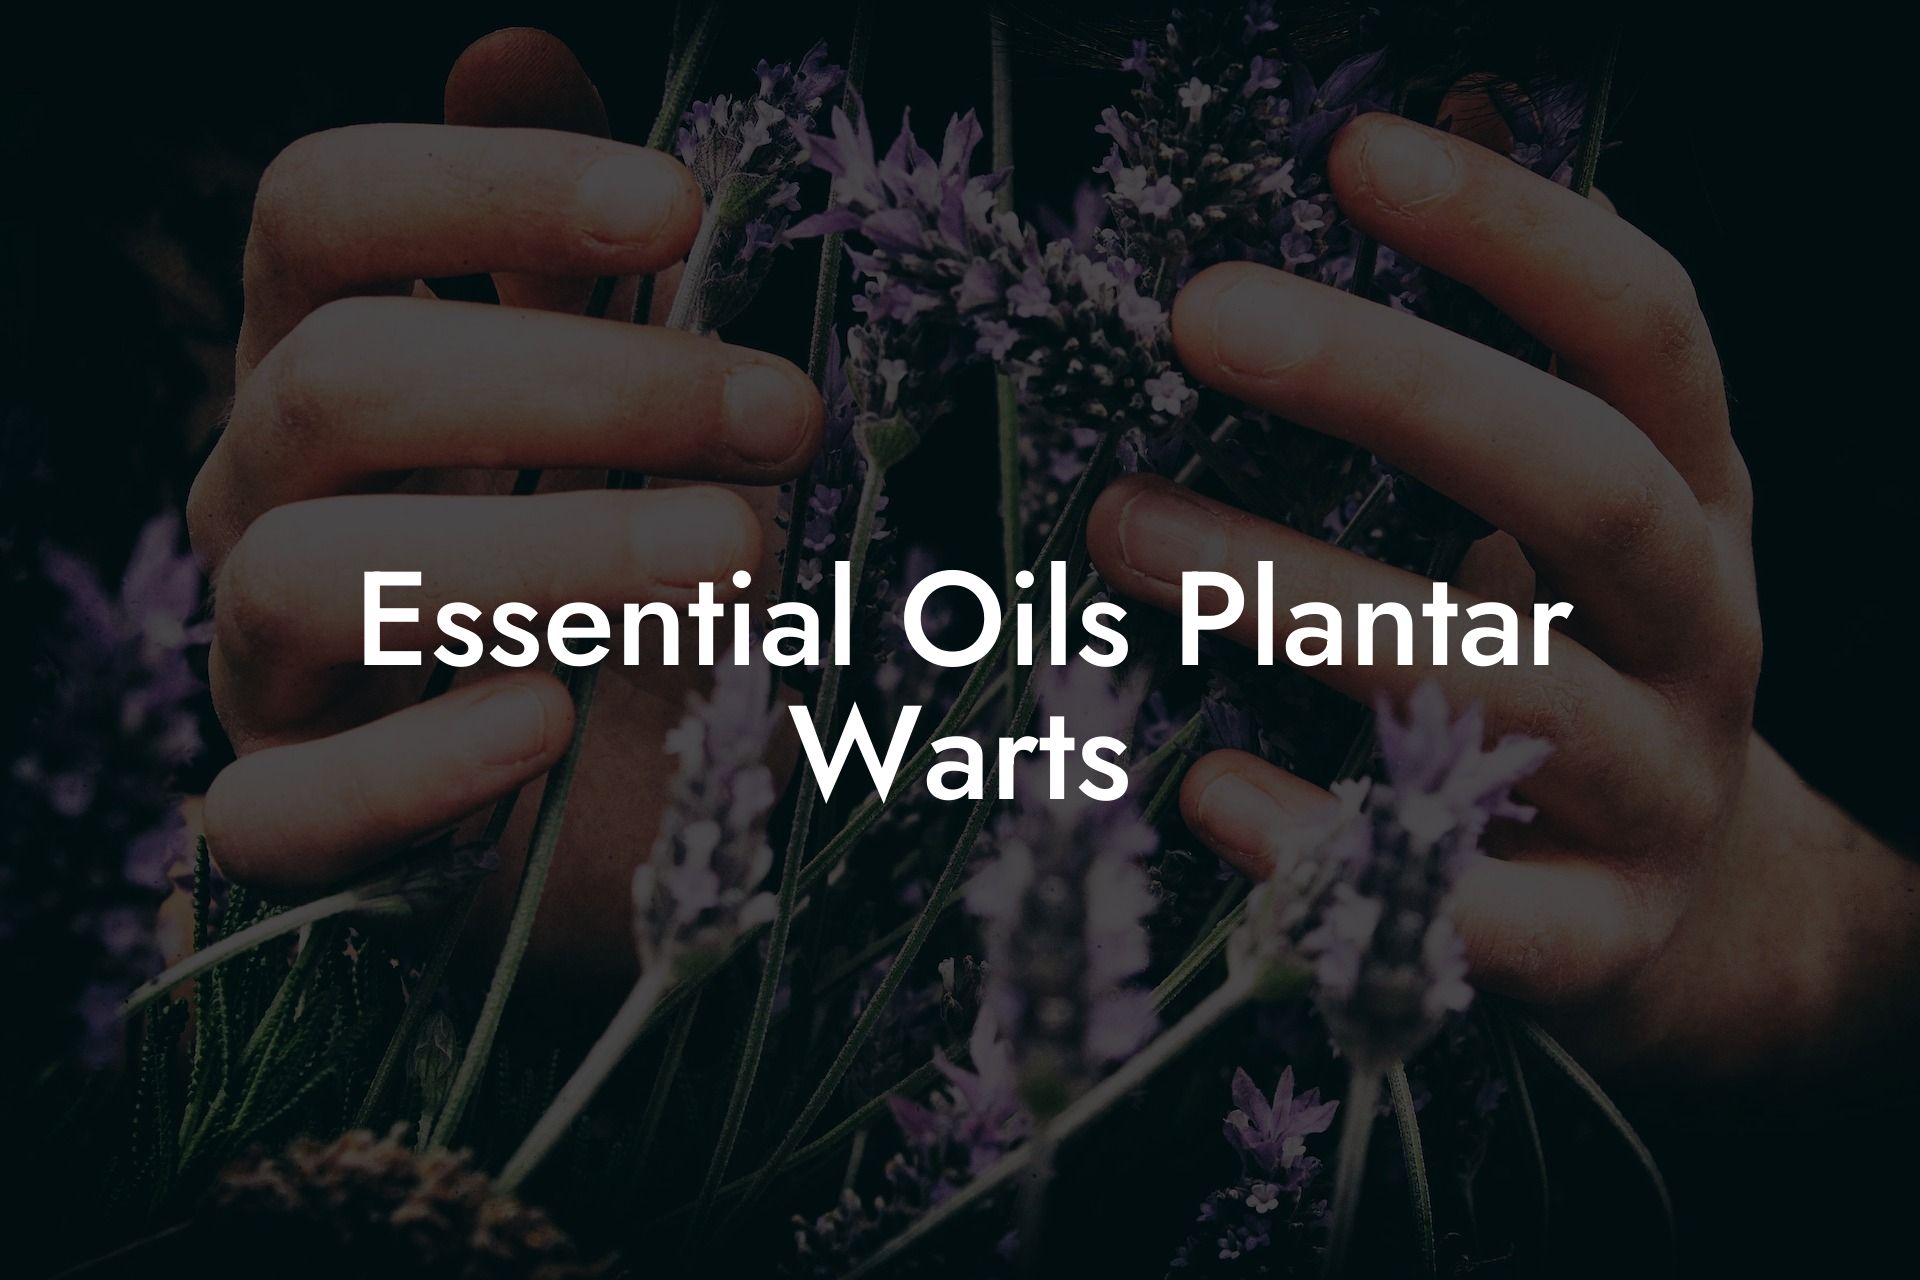 Essential Oils Plantar Warts